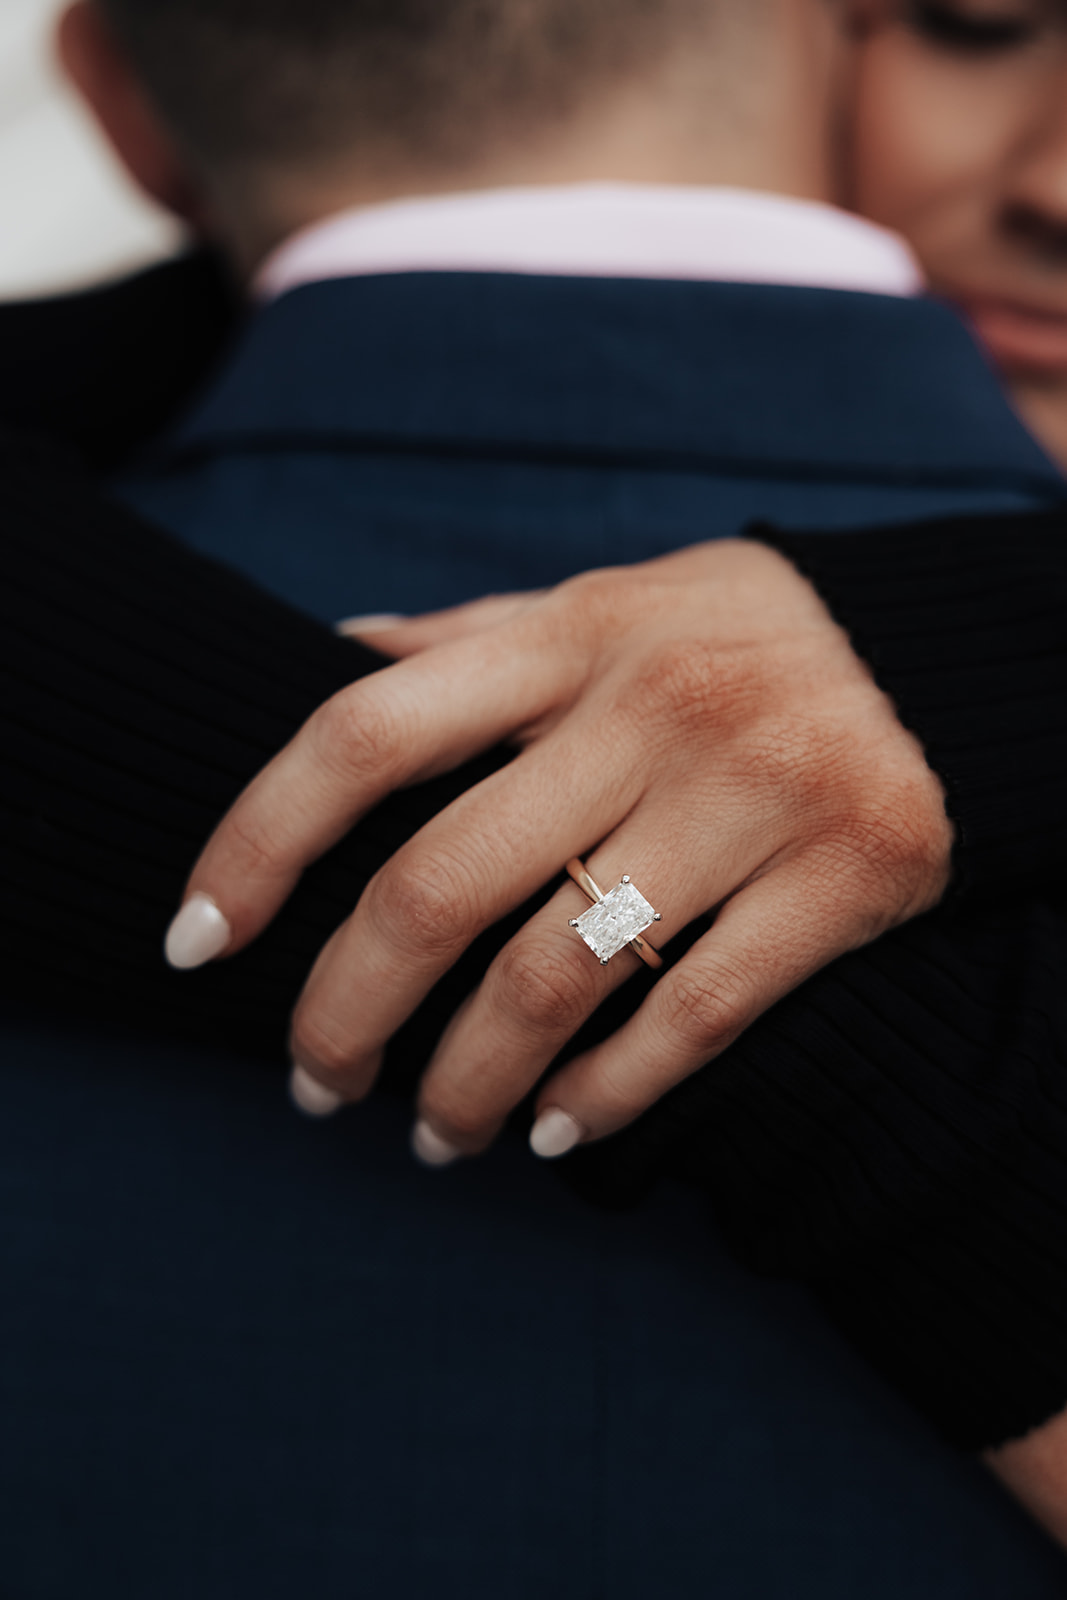 Engagement ring close-up photo